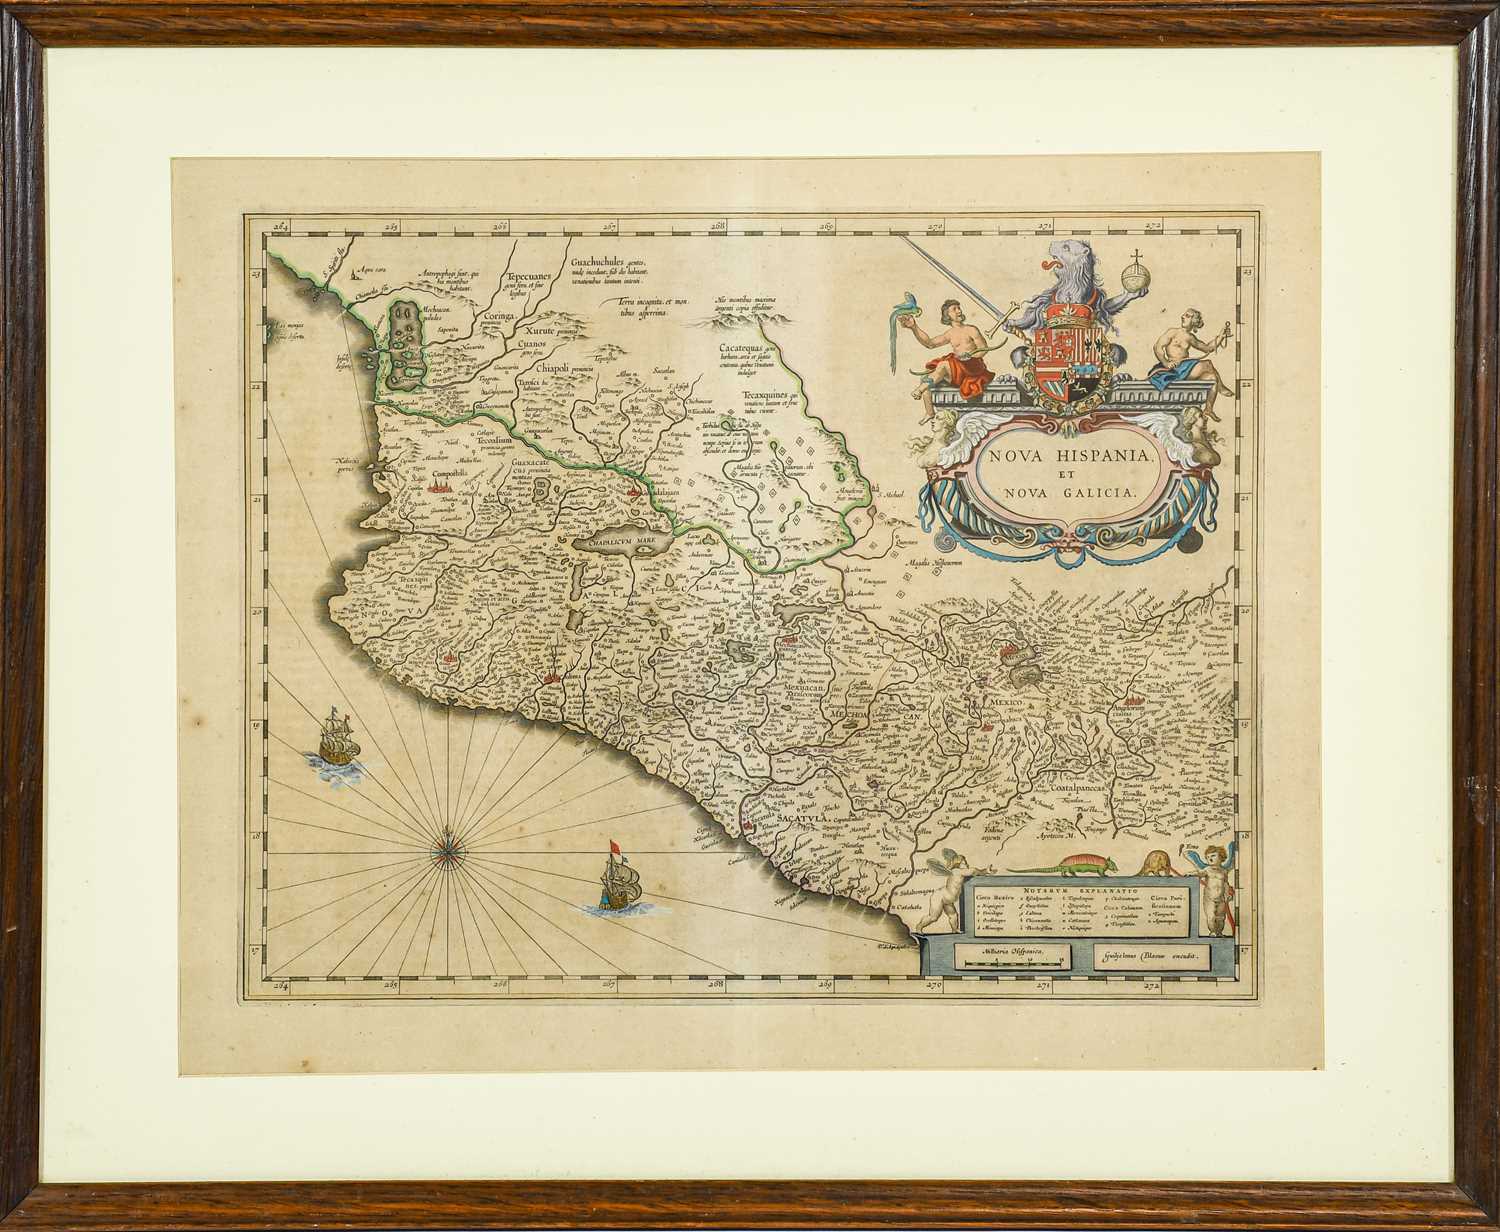 Lot 3 - Blaeu (Willem Janszoon). Nova Hispania et Nova Galicia, c.1636